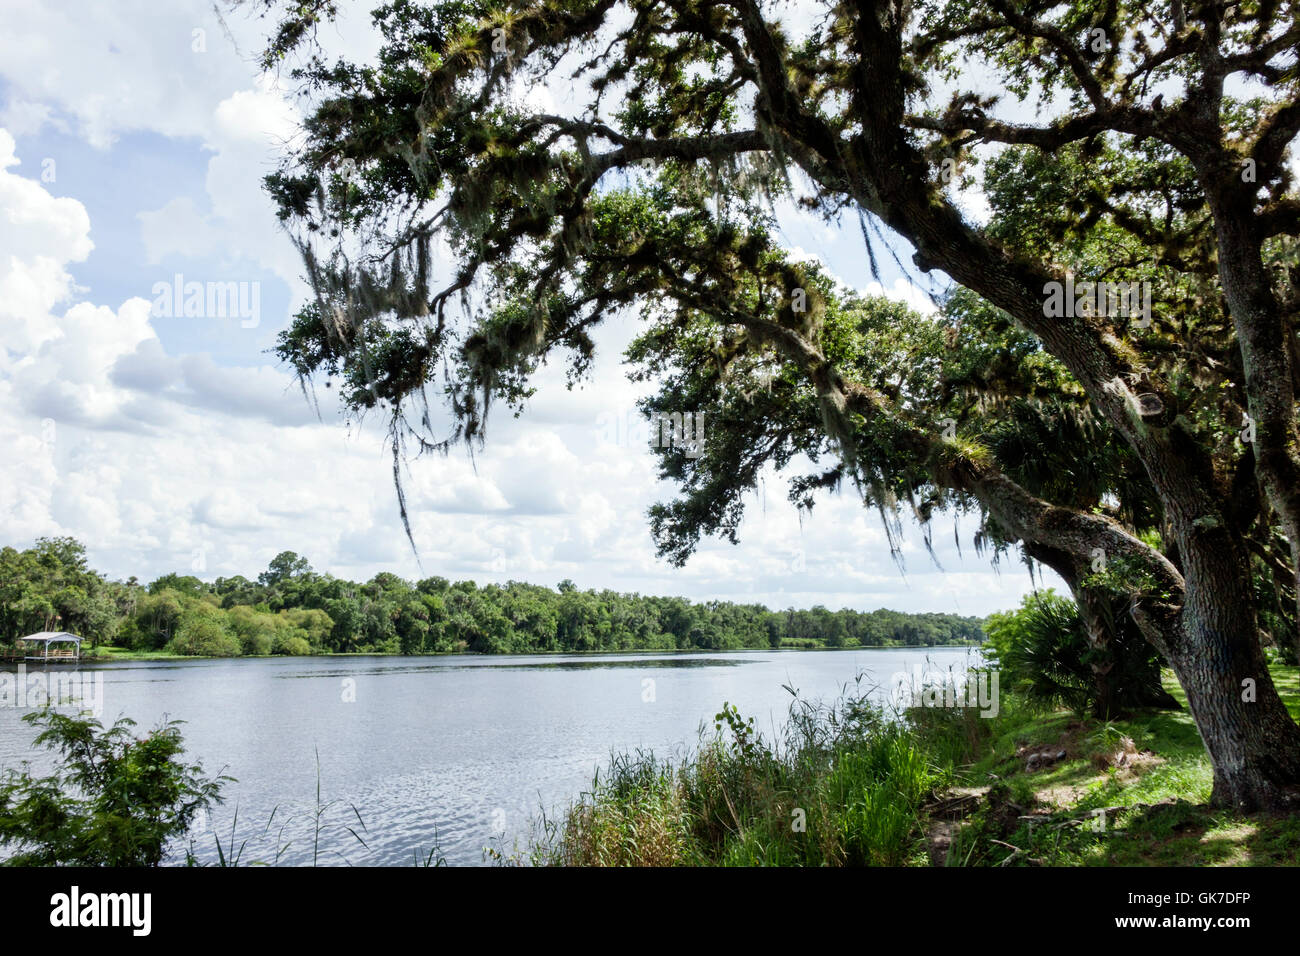 Florida Hendry County,La Belle,Caloosahatchee River,Bob Mason Waterfront Park,public park,tree,live oak,Spanish Moss,trunk,bark,FL160630014 Stock Photo